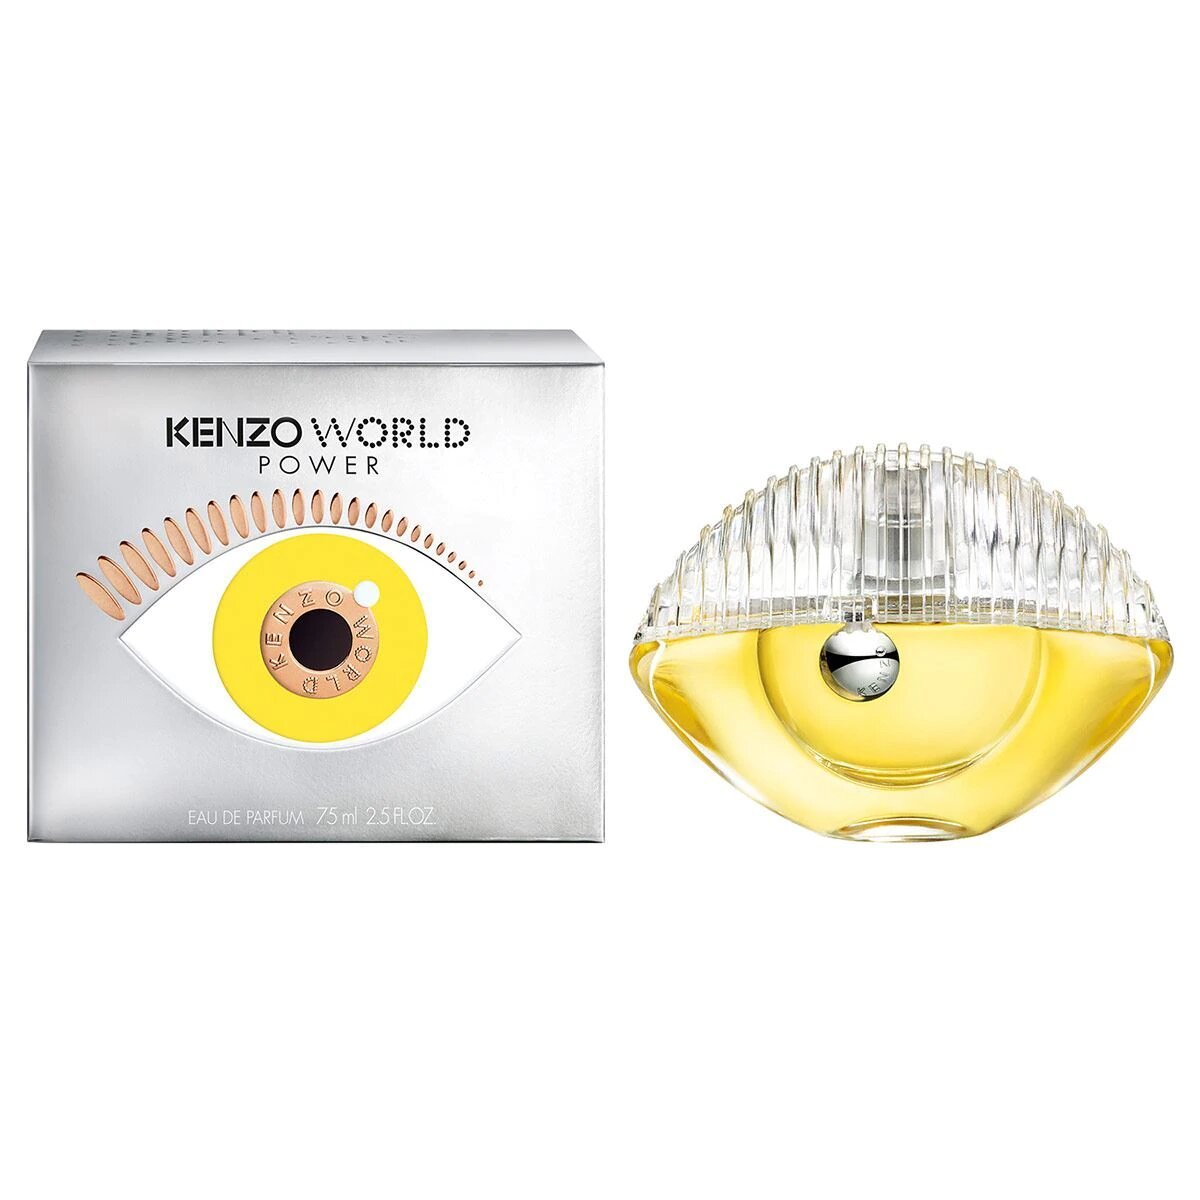 KENZO - Kenzo World Power para mujer / 75 ml Eau De Parfum Spray